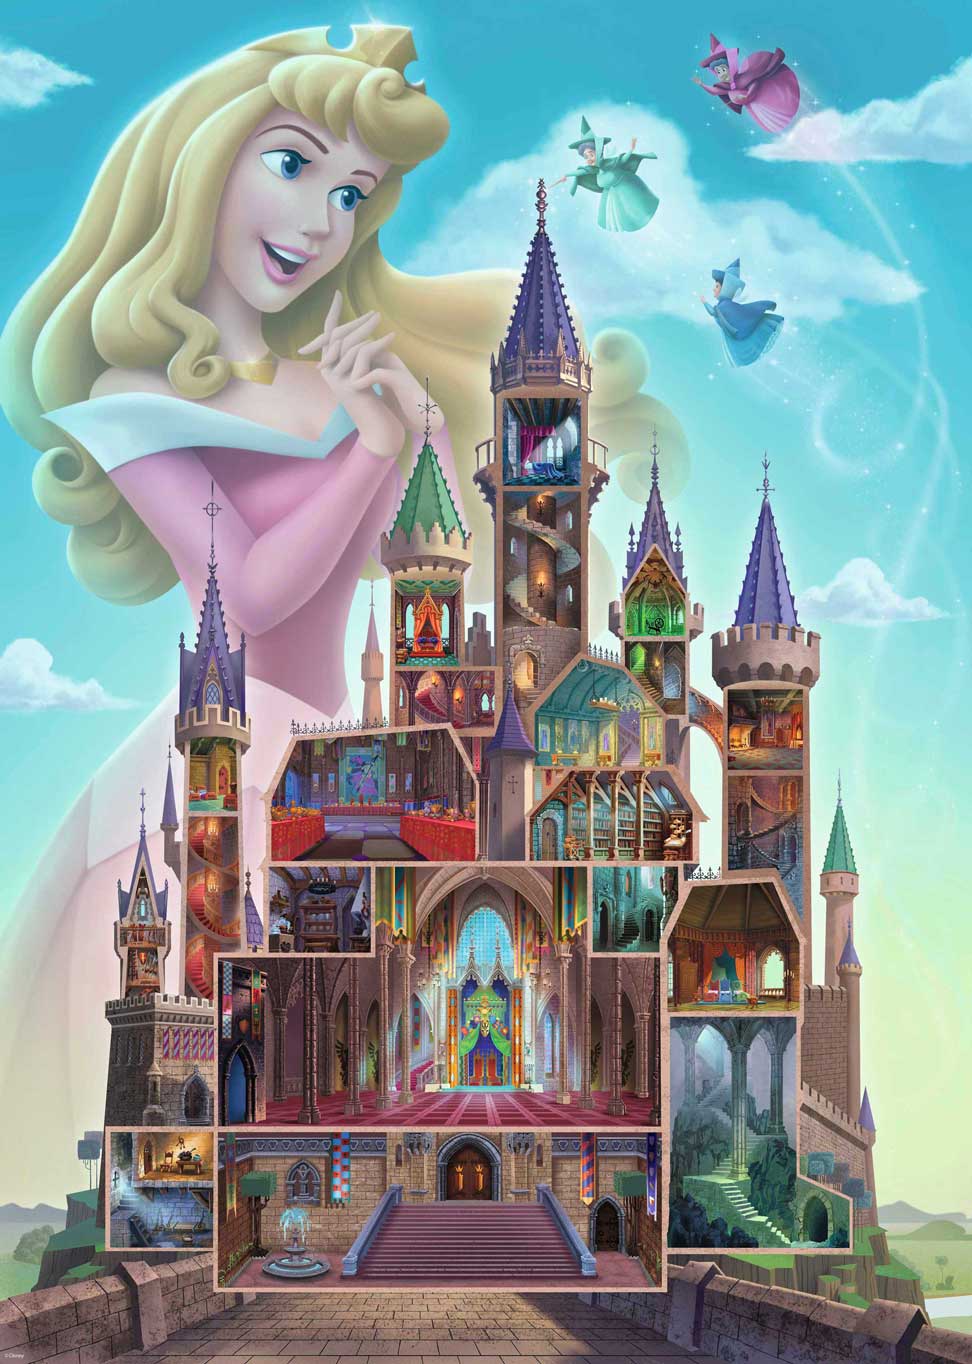 Puzzle Ravensburger Castelos da Disney: Aurora de 1000 Pçs